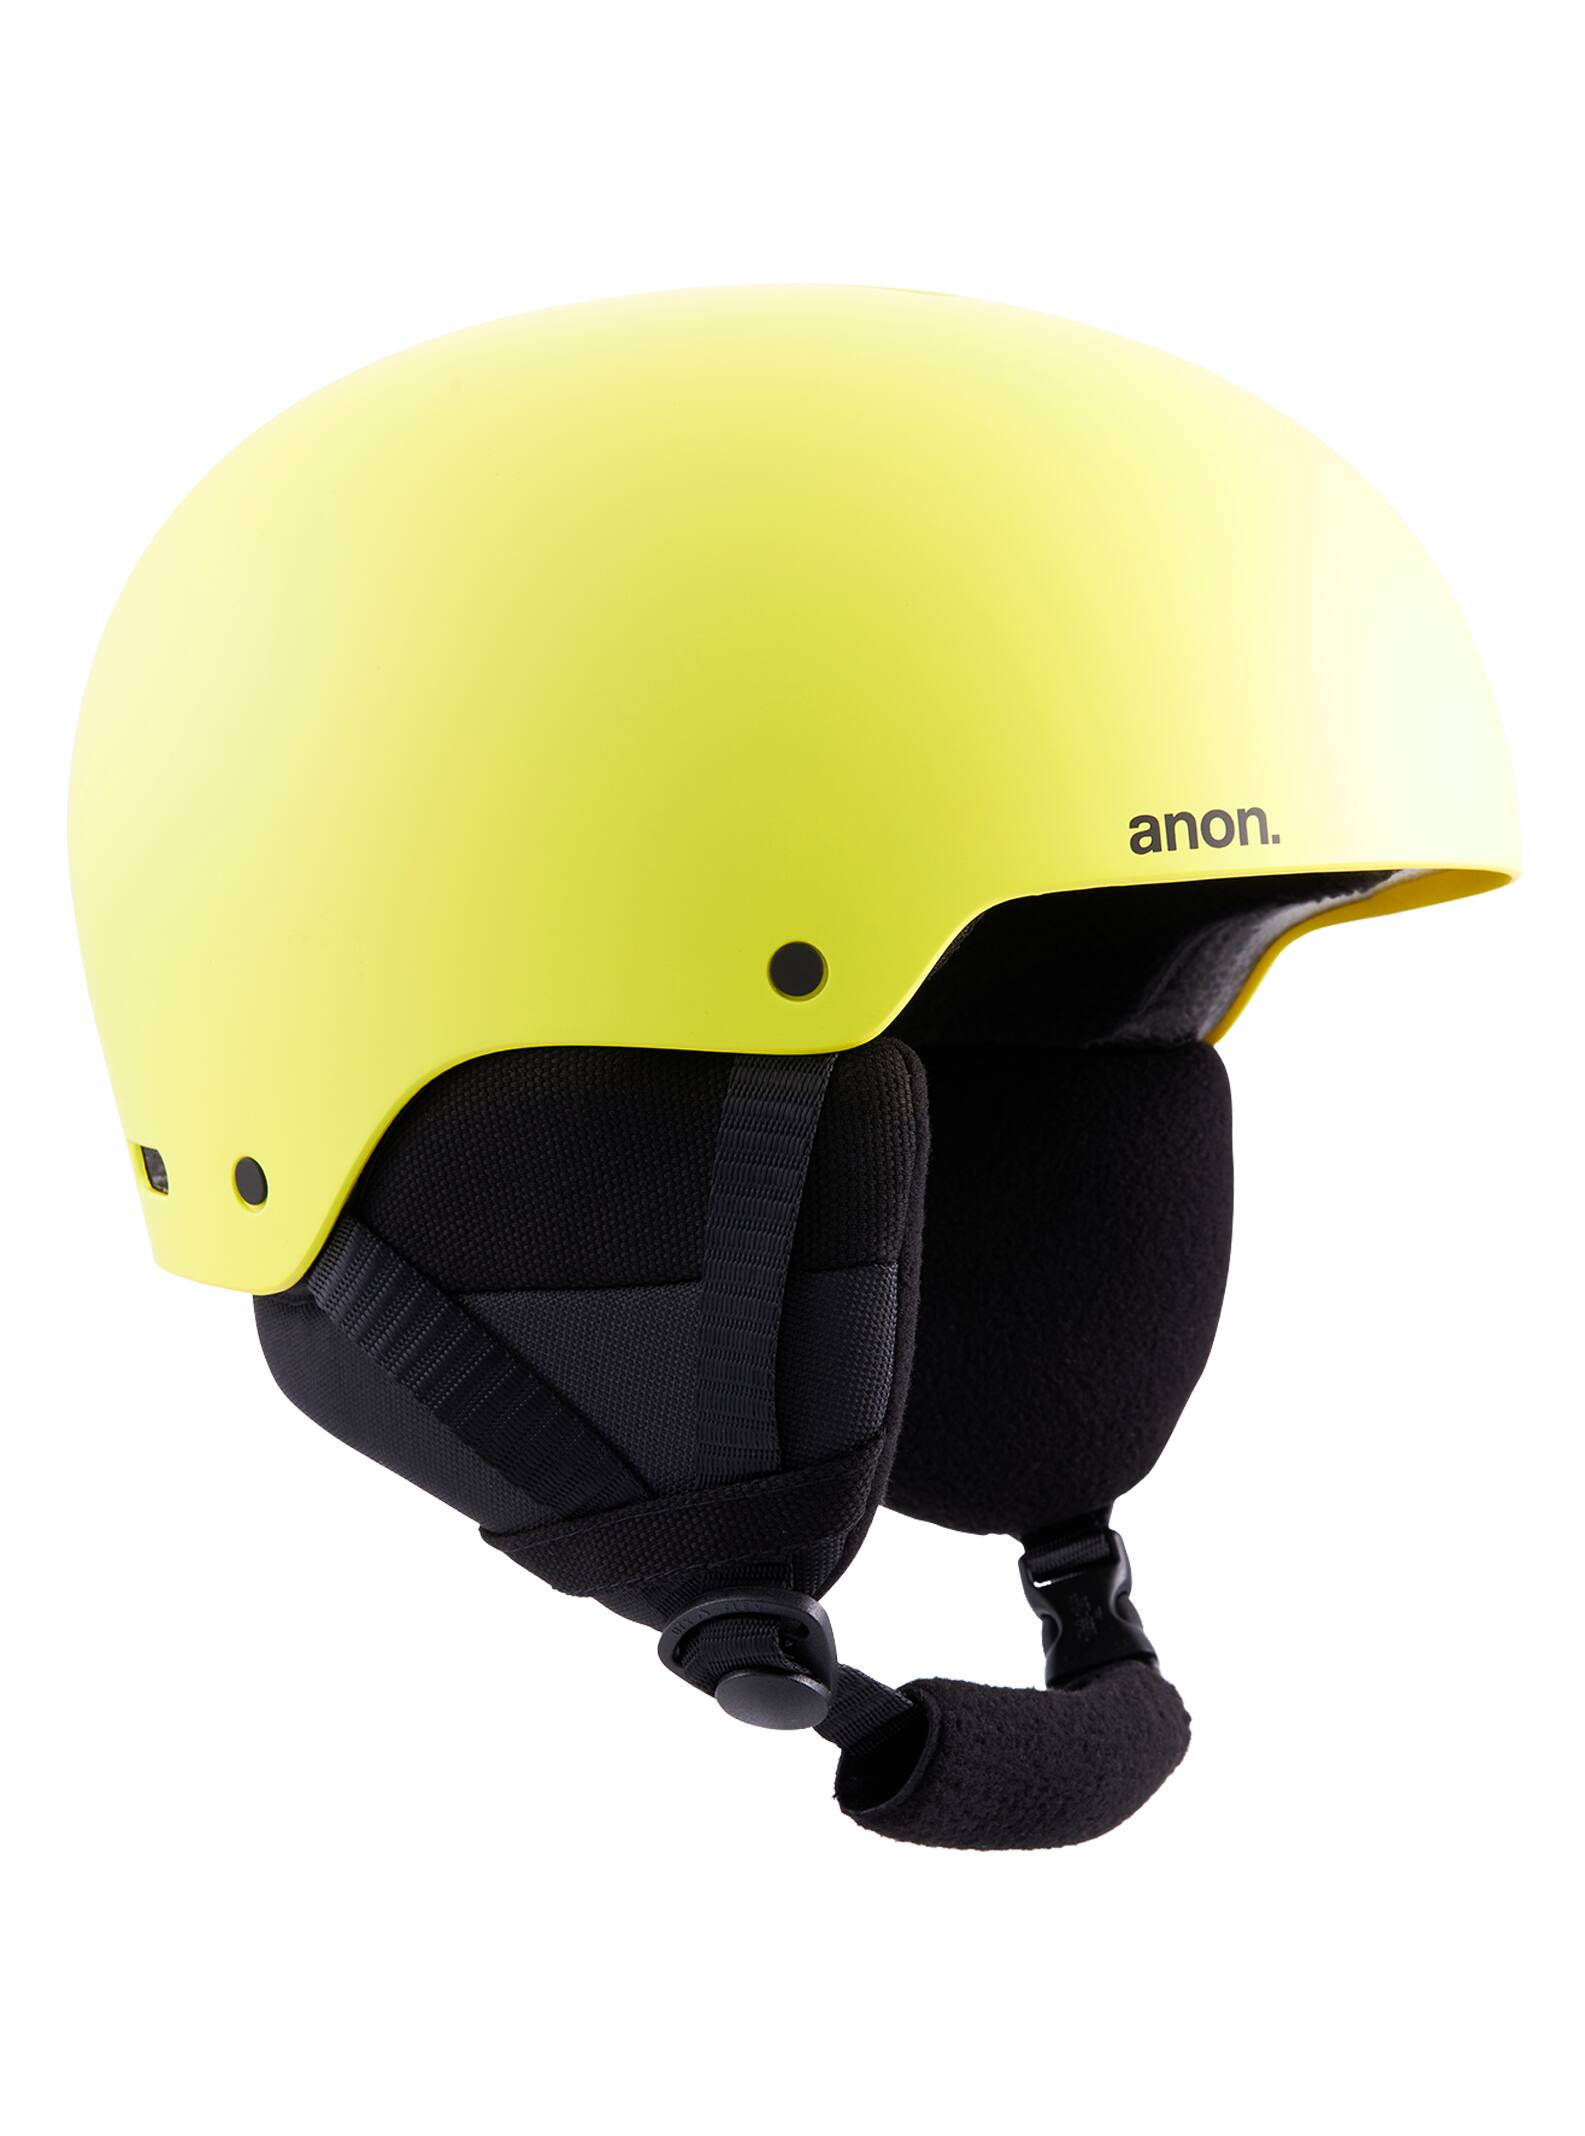 Anon Raider 3 Helmet | Burton.com Winter 2022 US